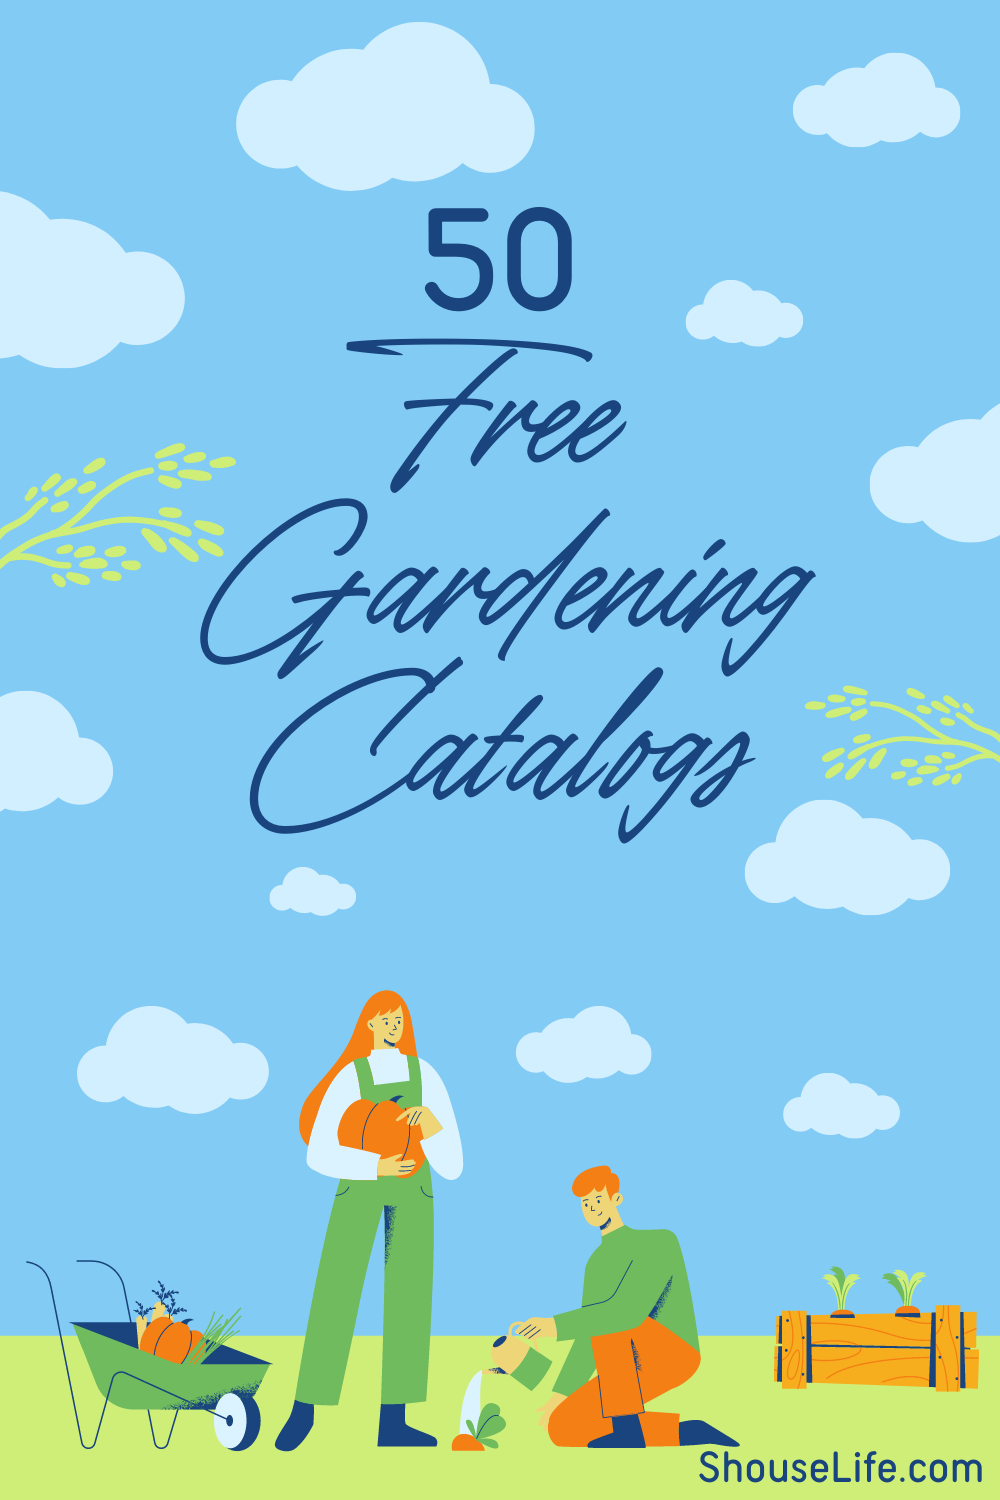 Free Gardening Catalogs